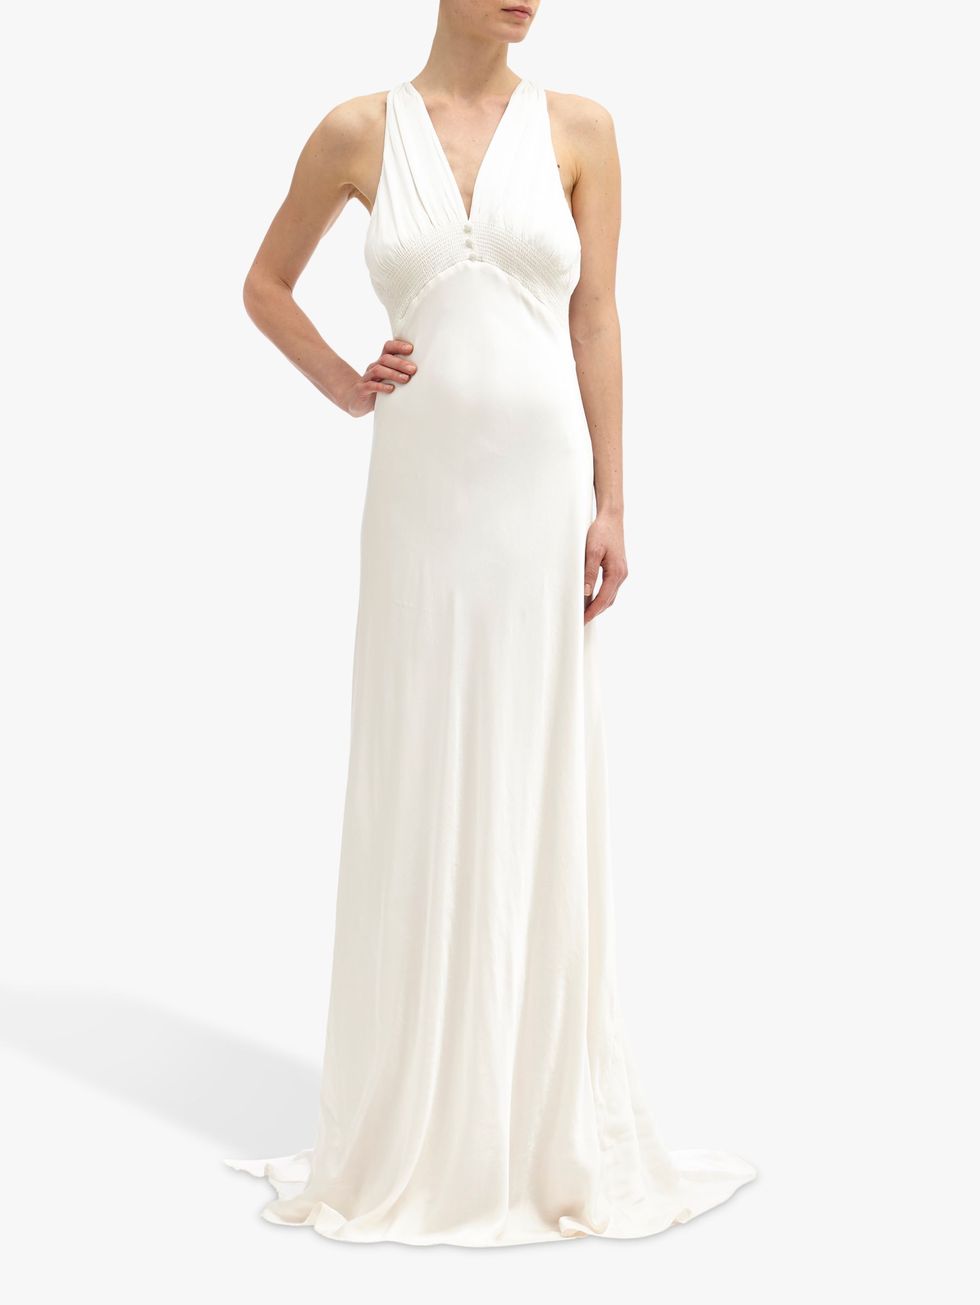 Meghan Markle best friend Jessica Mulroney copies royal wedding gown -  9Style